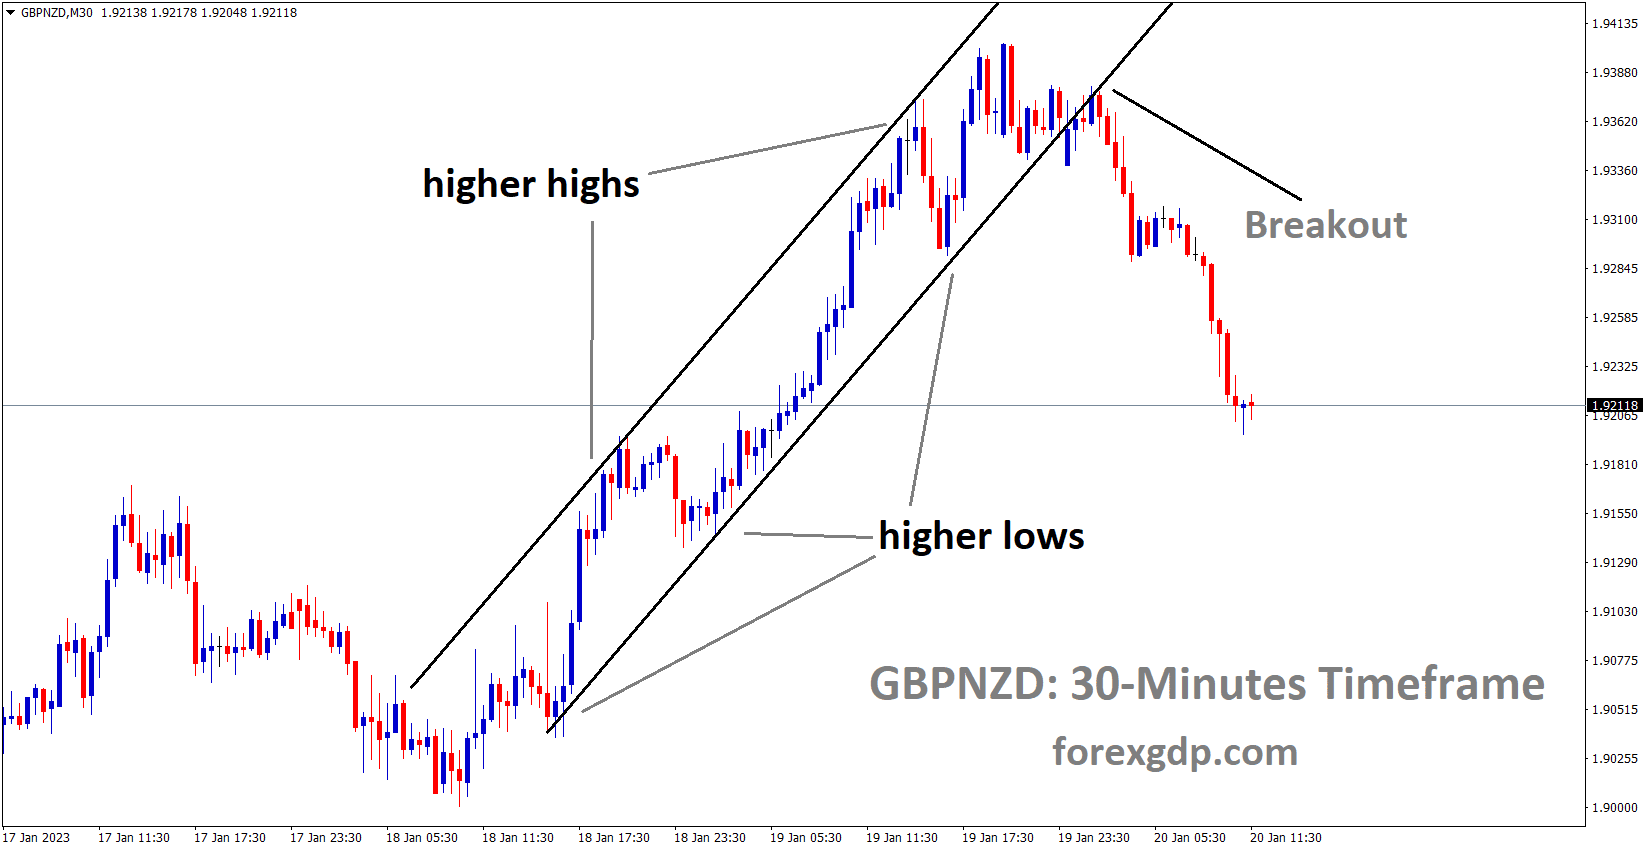 GBPNZD has broken the Ascending channel in Downside